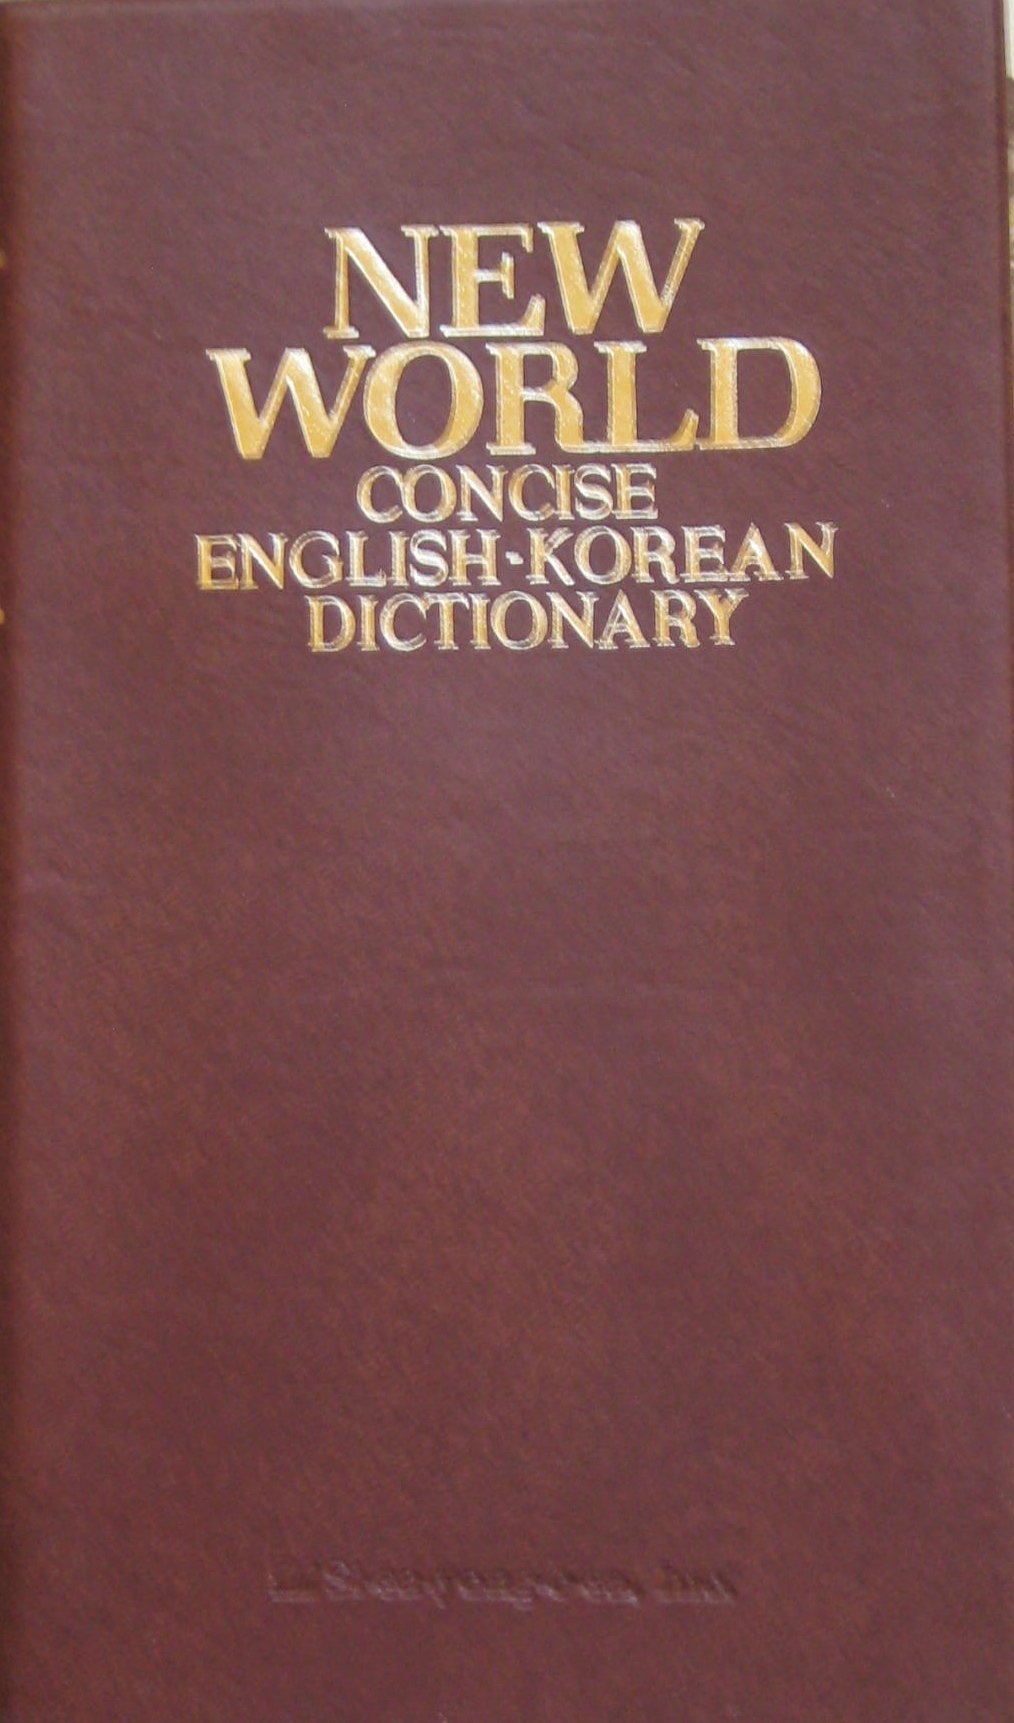 New World Concise English-Korean Dictionary